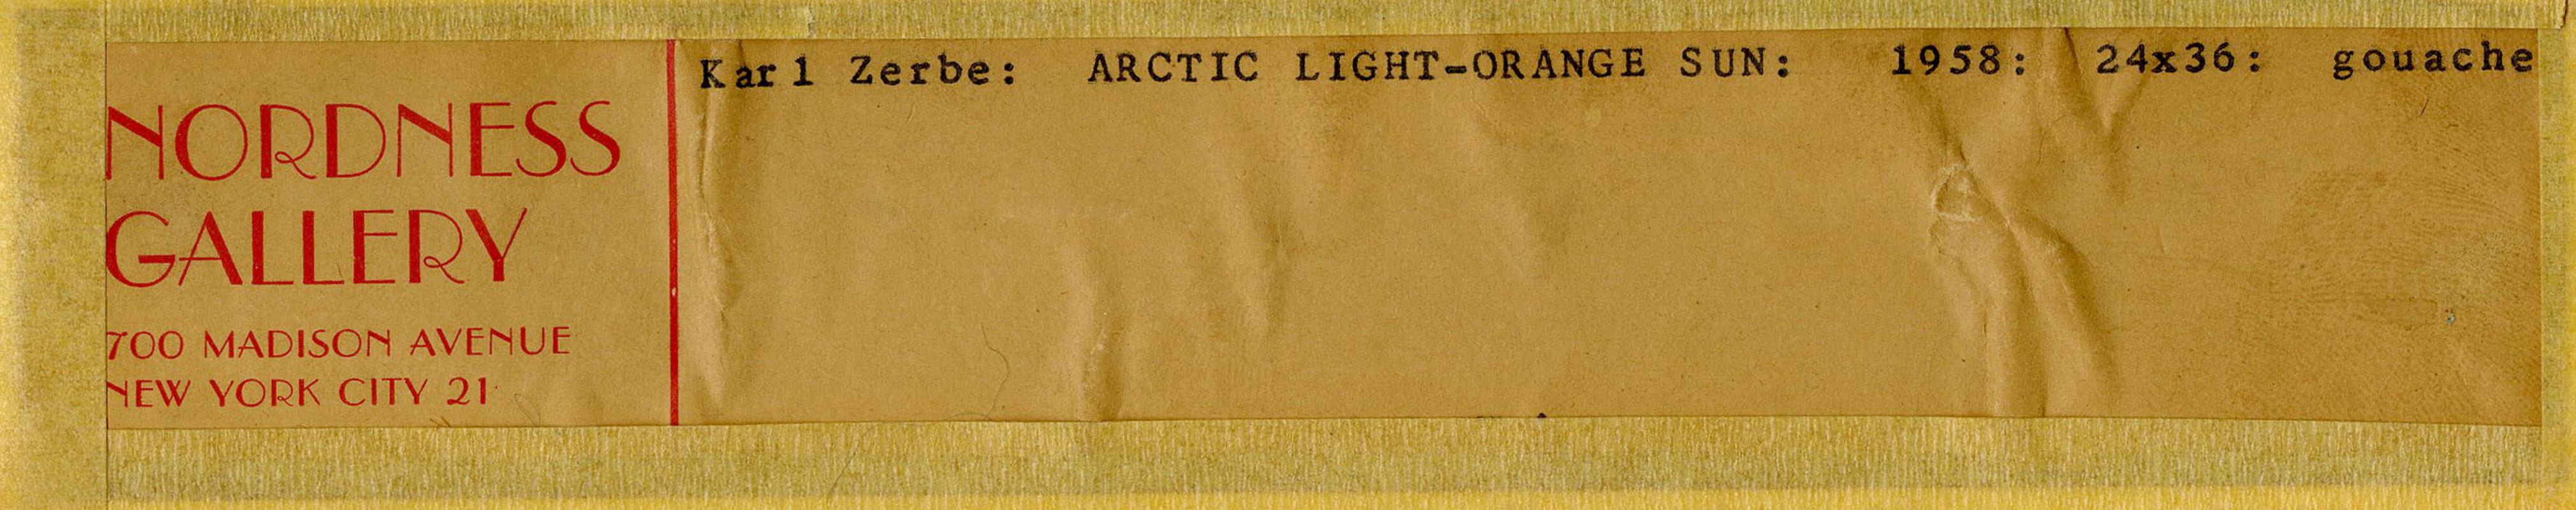 Luminaire arctique - Soleil orange en vente 1